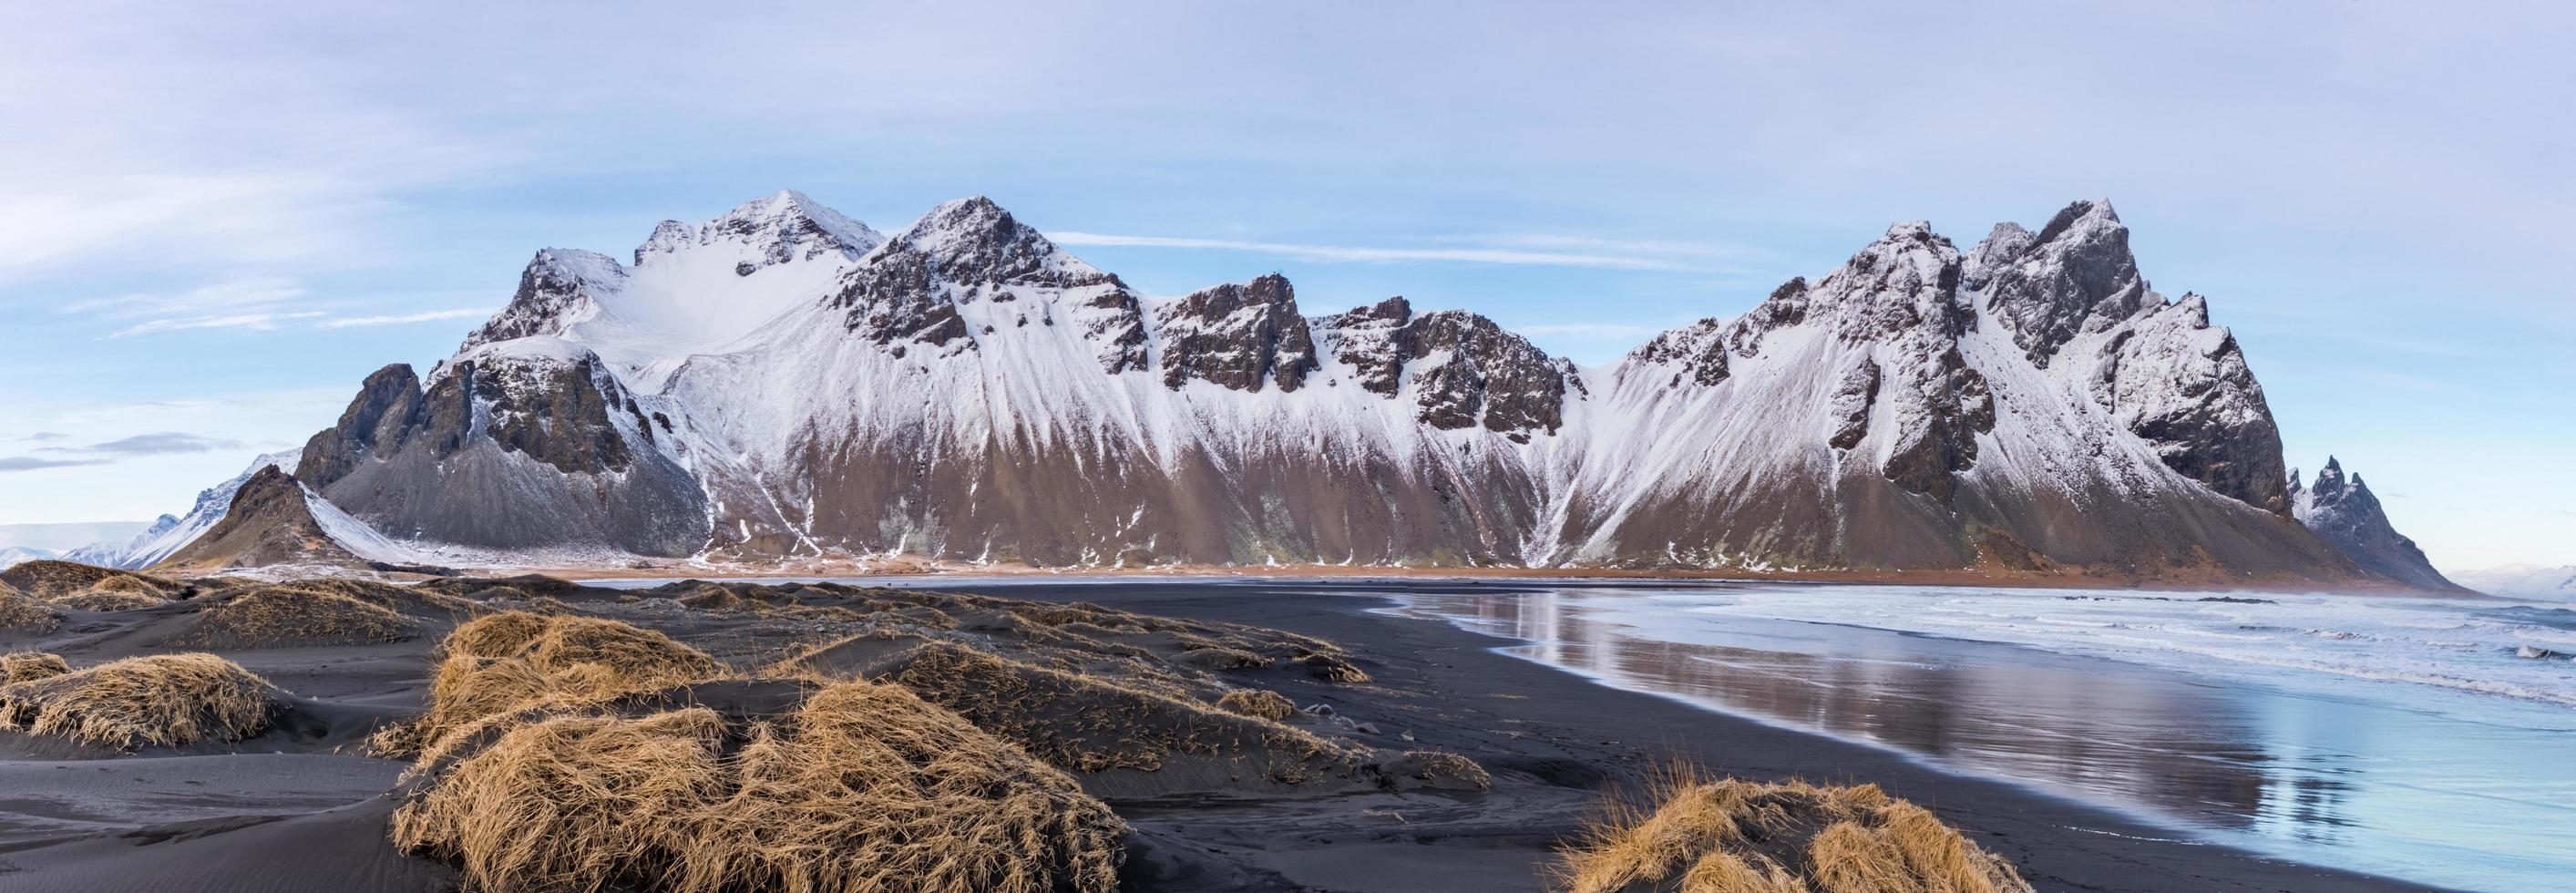 vista da Península de Stokksnes no Parque Nacional vatnajokull na Islândia foto